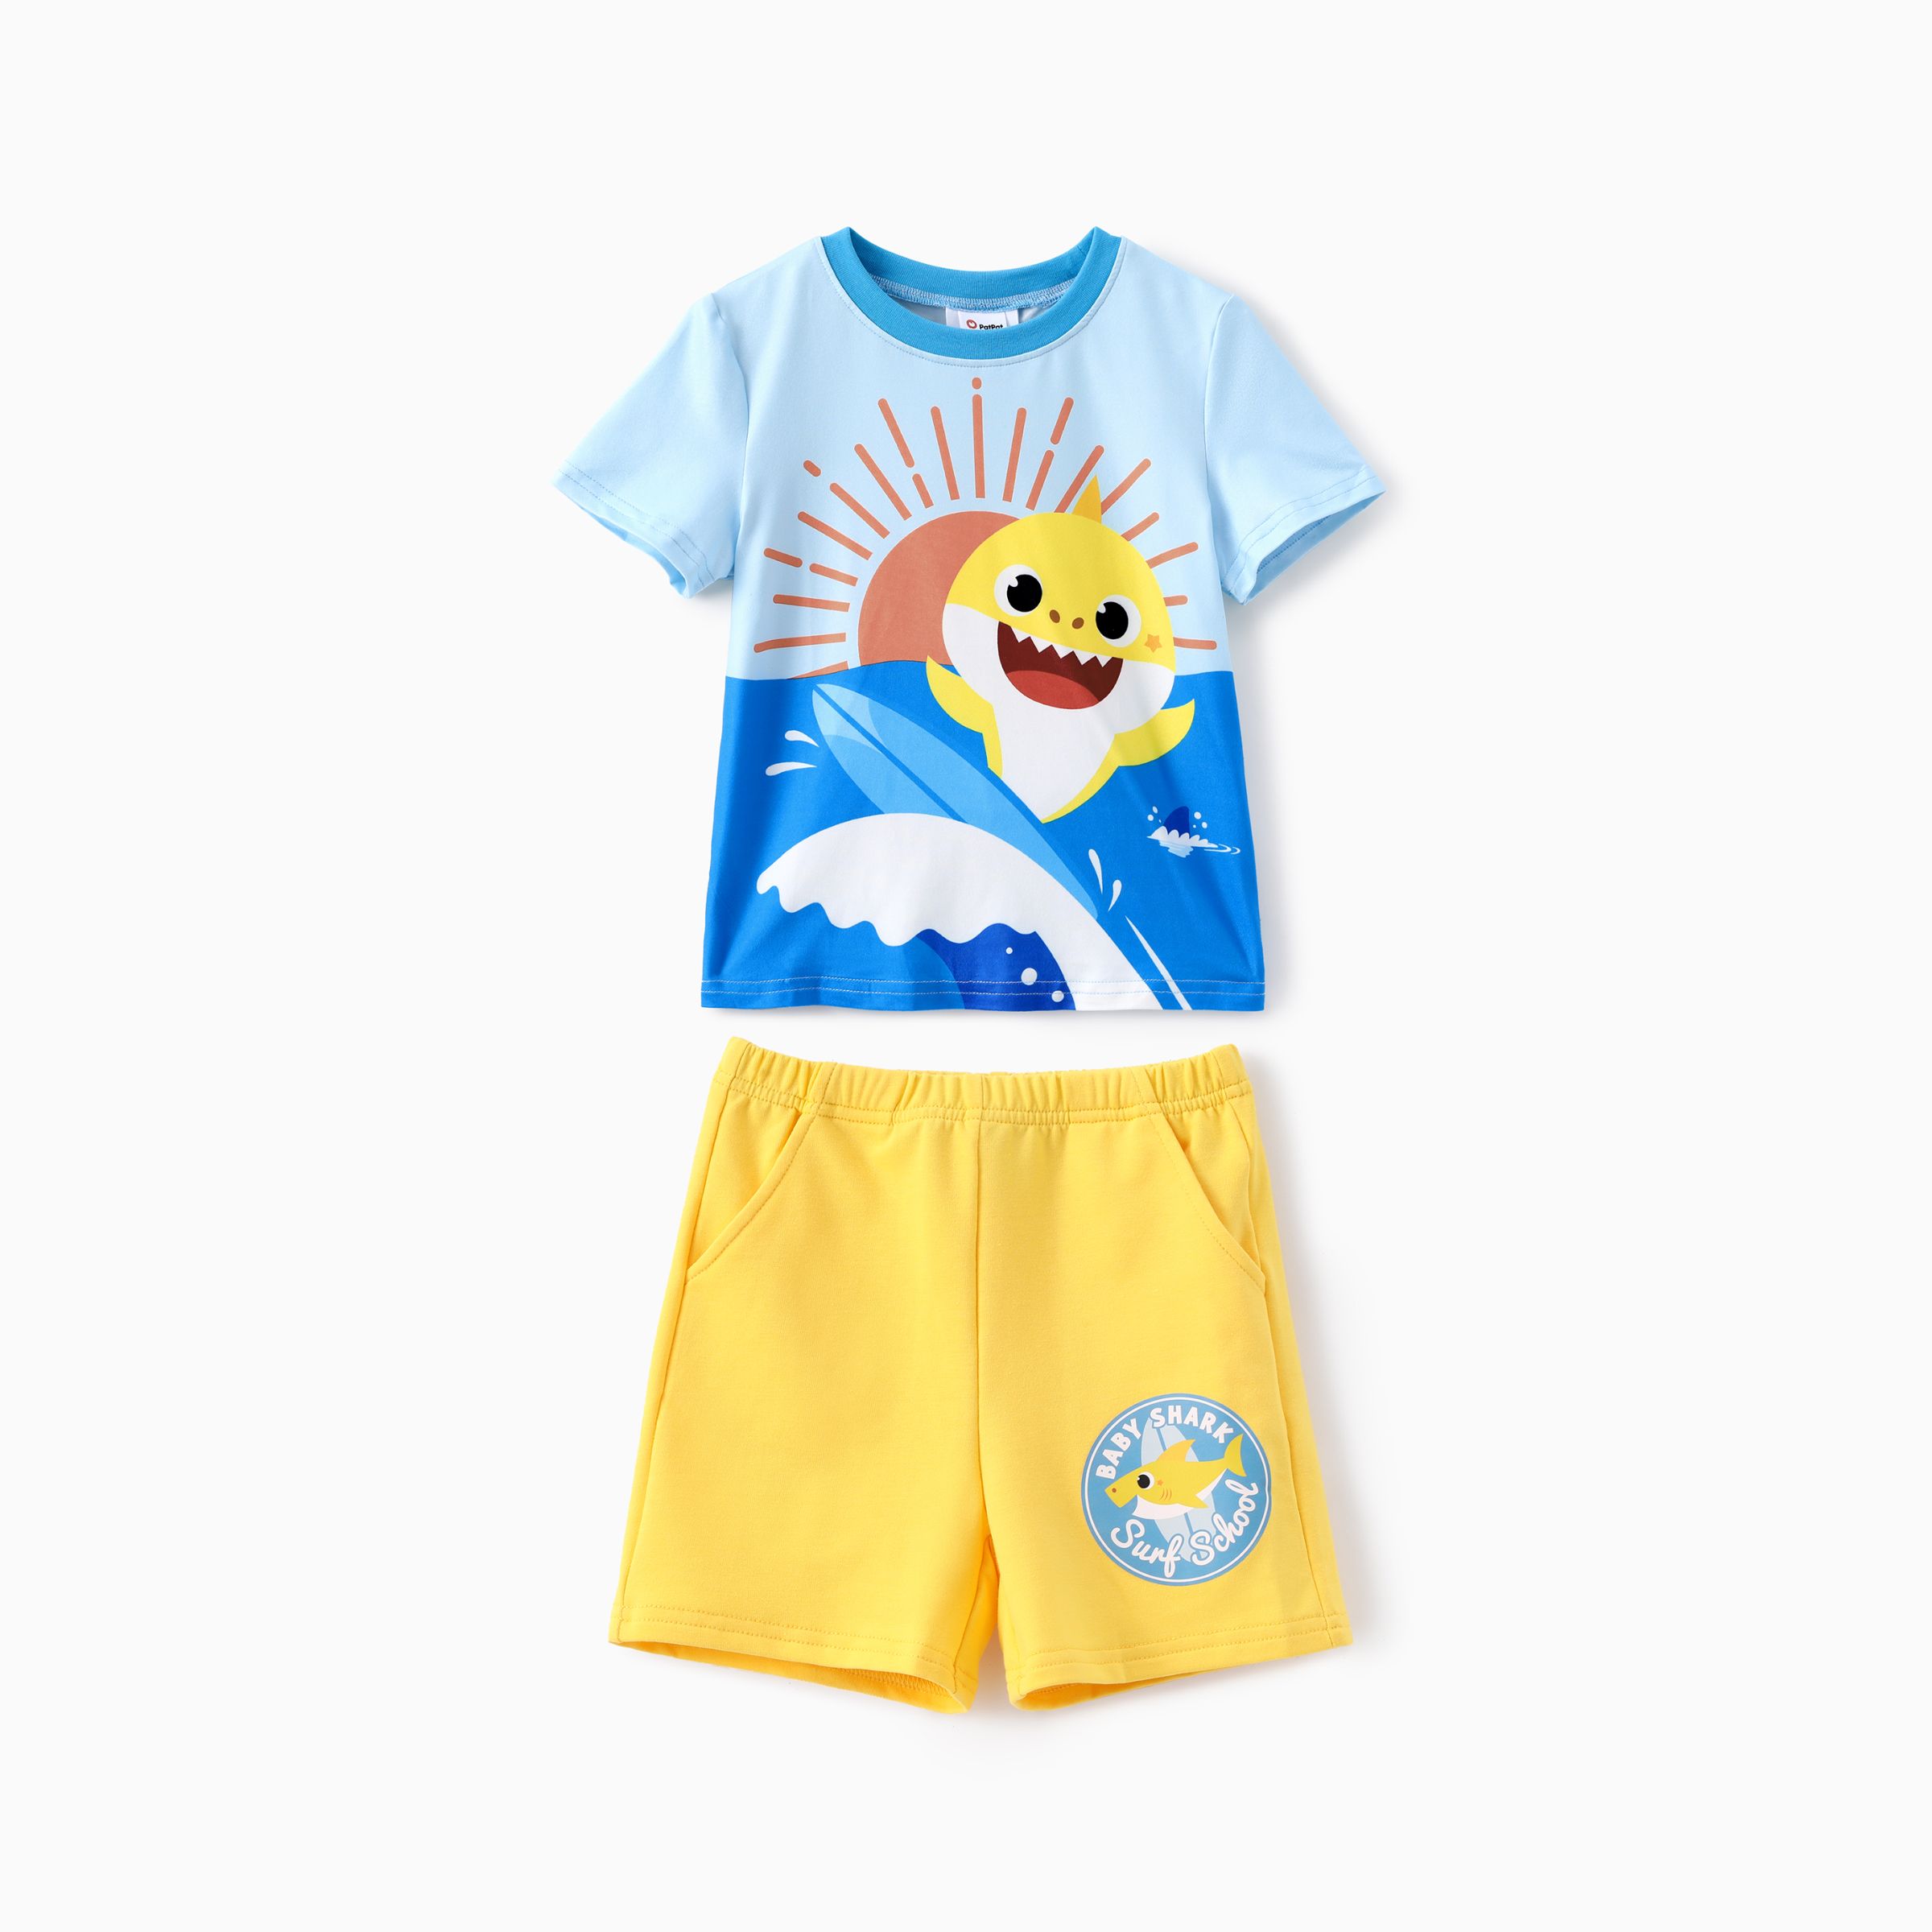 

Baby Shark Toddler Boys 2pcs Sunshine Surfing Shark Print Tee with Shorts Set